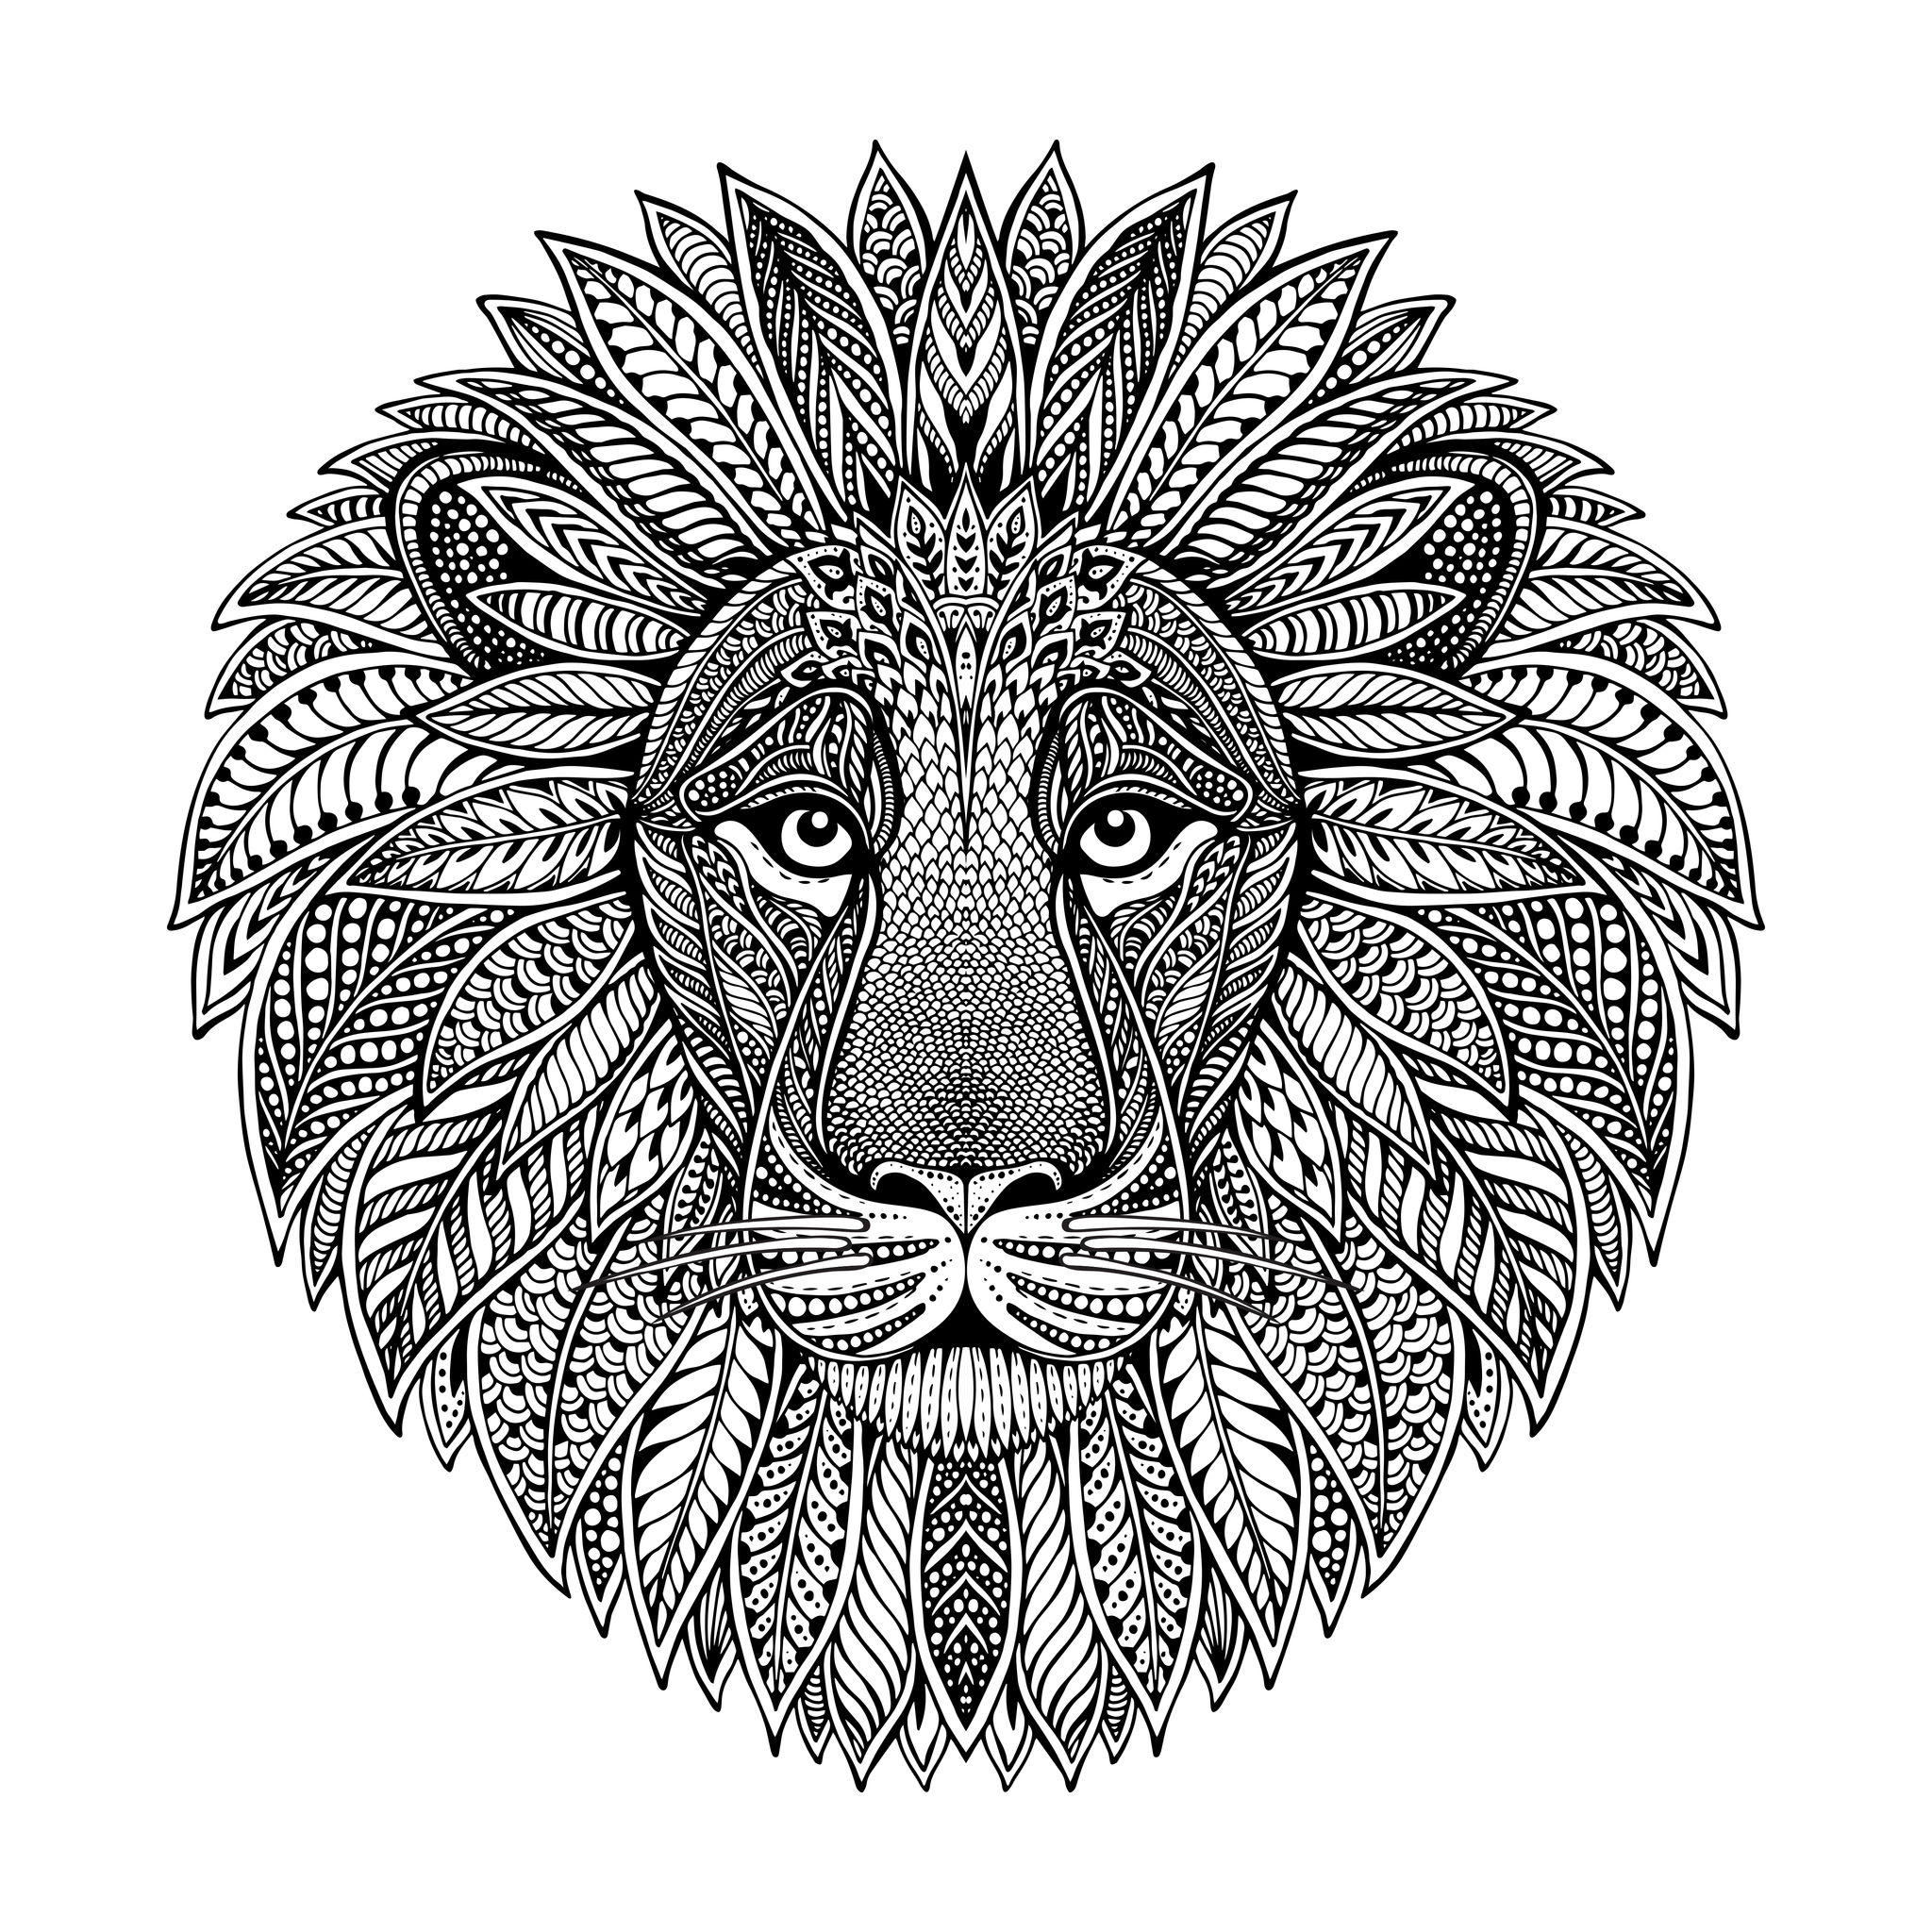 Lion head, mandala style, Artist : Nadezhda Molkentin   Source : 123rf